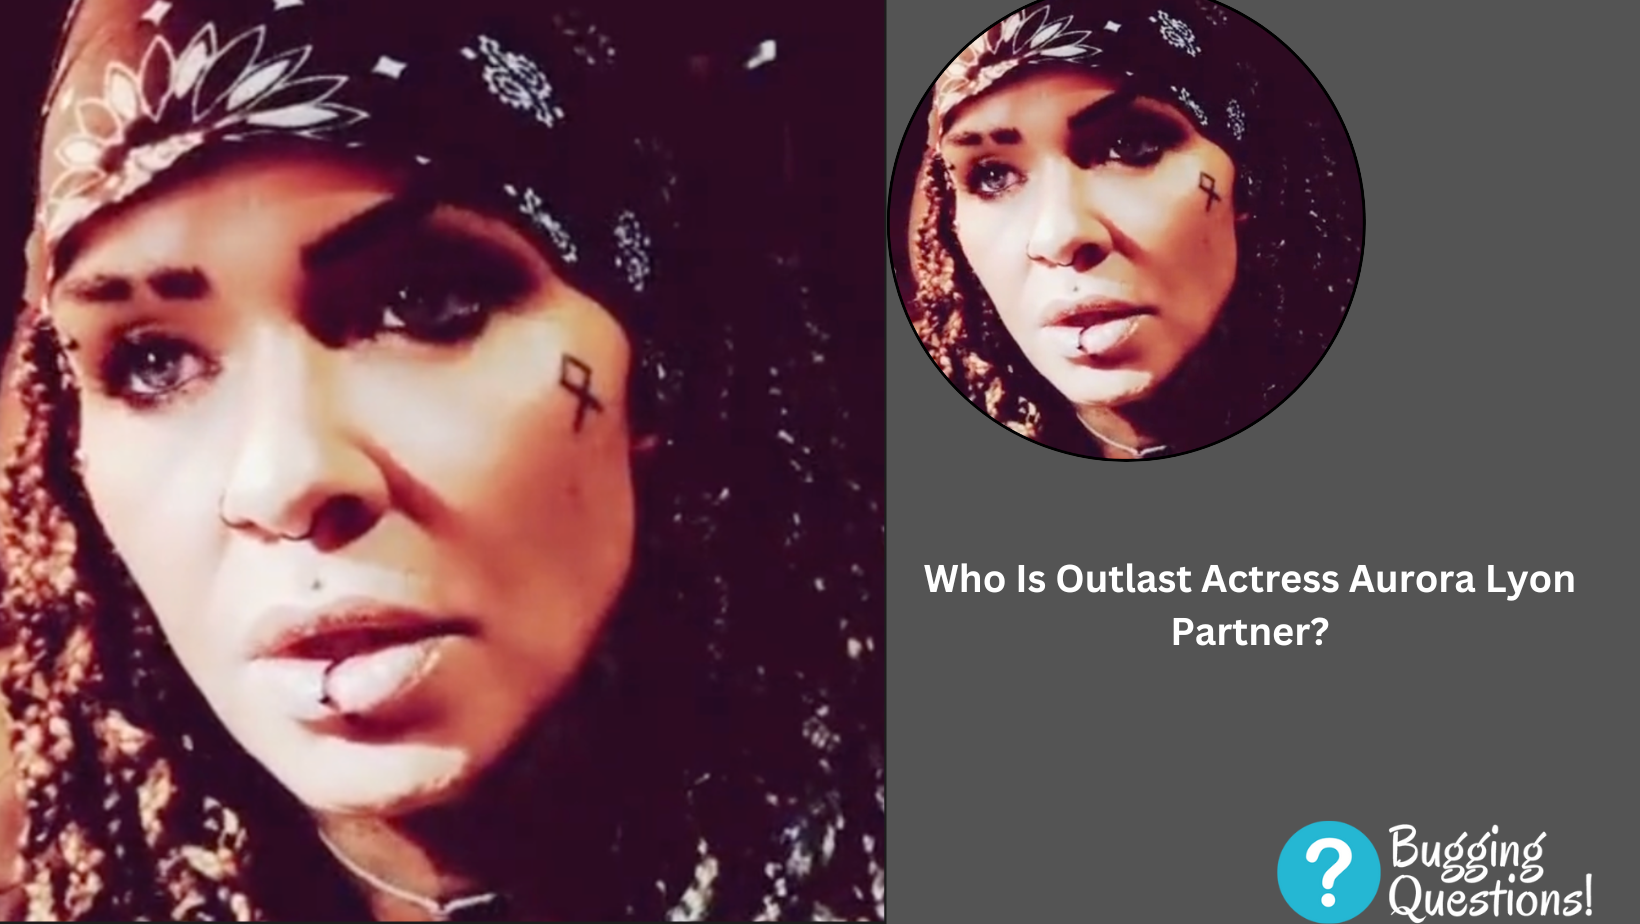 Who Is Outlast Actress Aurora Lyon Partner?